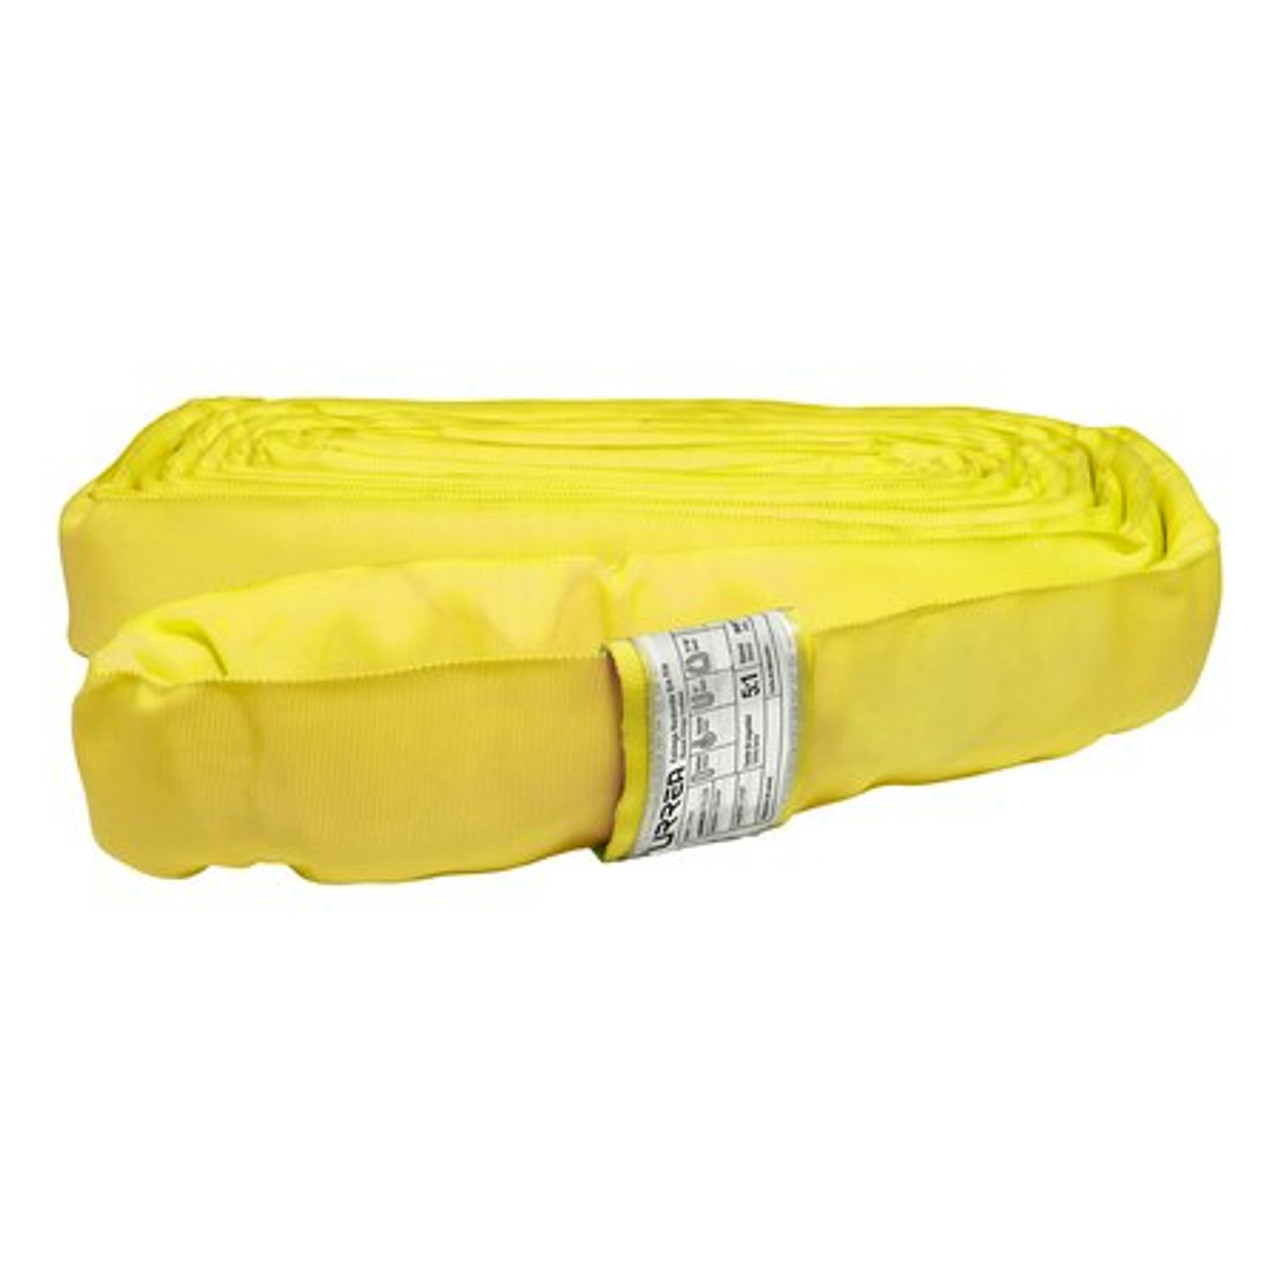 URREA Endless round sling 1" x 20 yellow